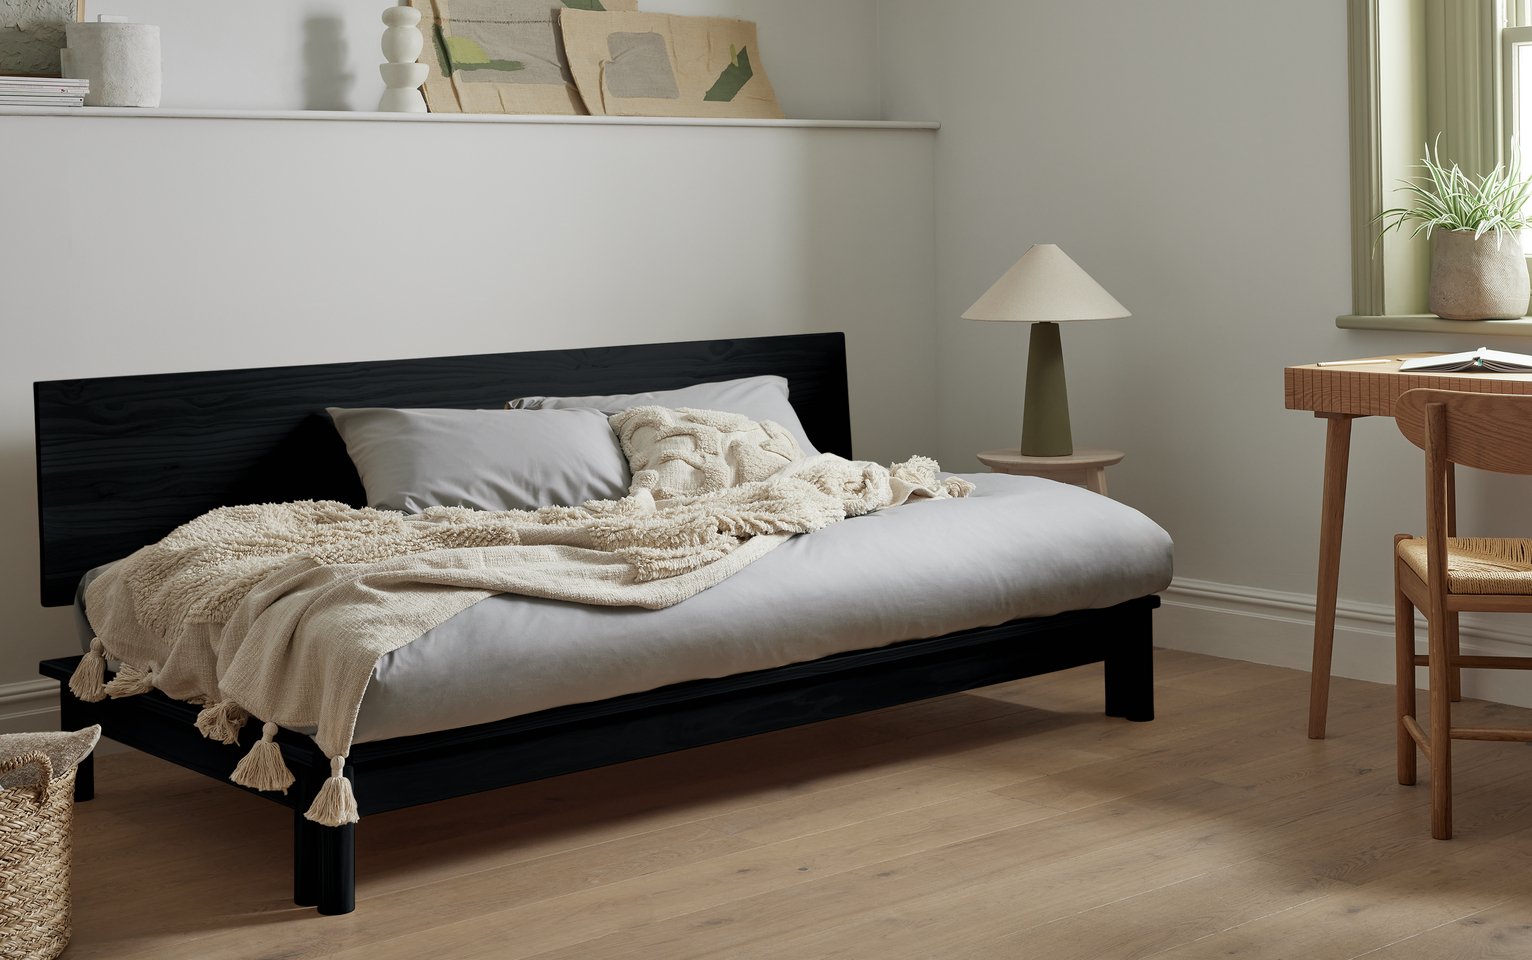 Habitat Akio Guest Bed with 2 Mattresses - Black